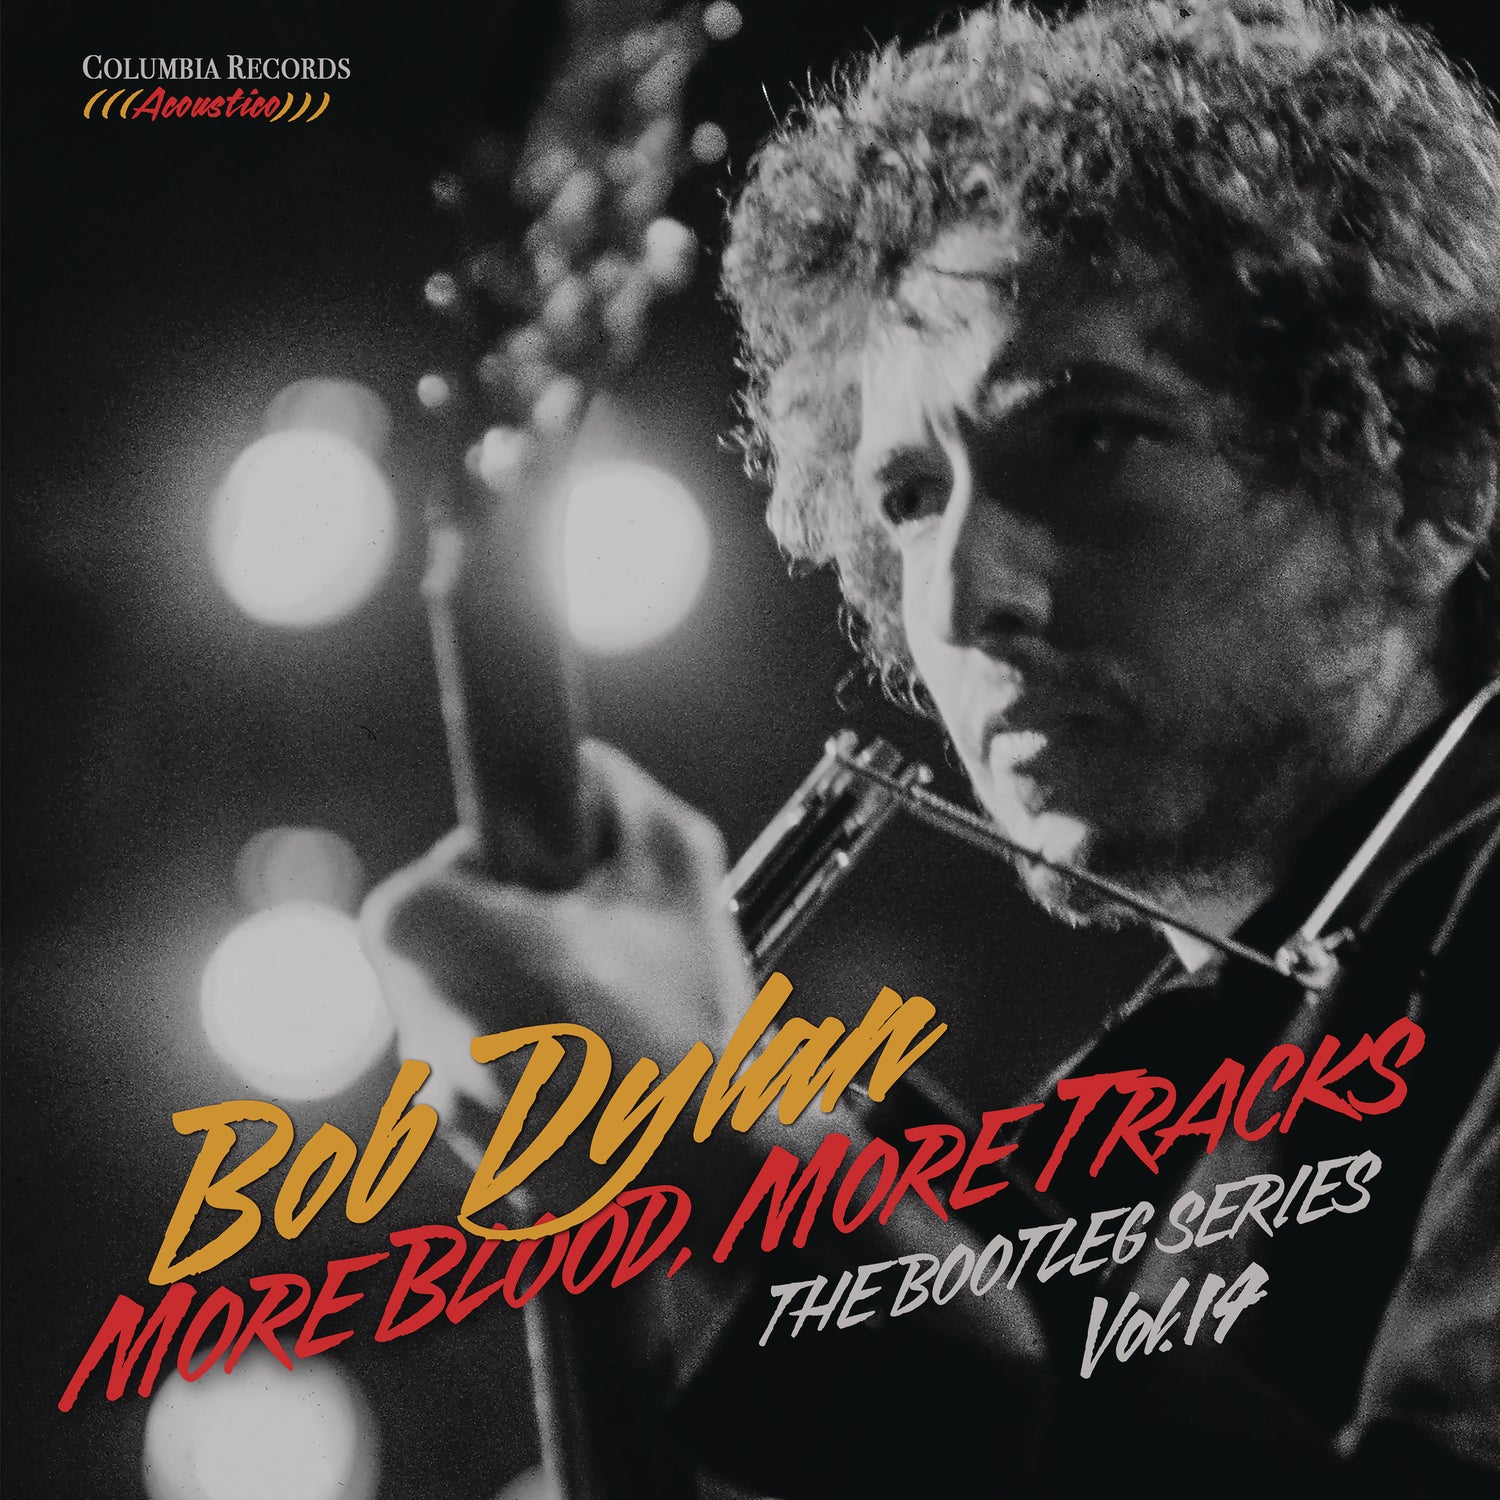 Bob Dylan More Blood, More Tracks: The Bootleg Series Vol. 14 Vinyl